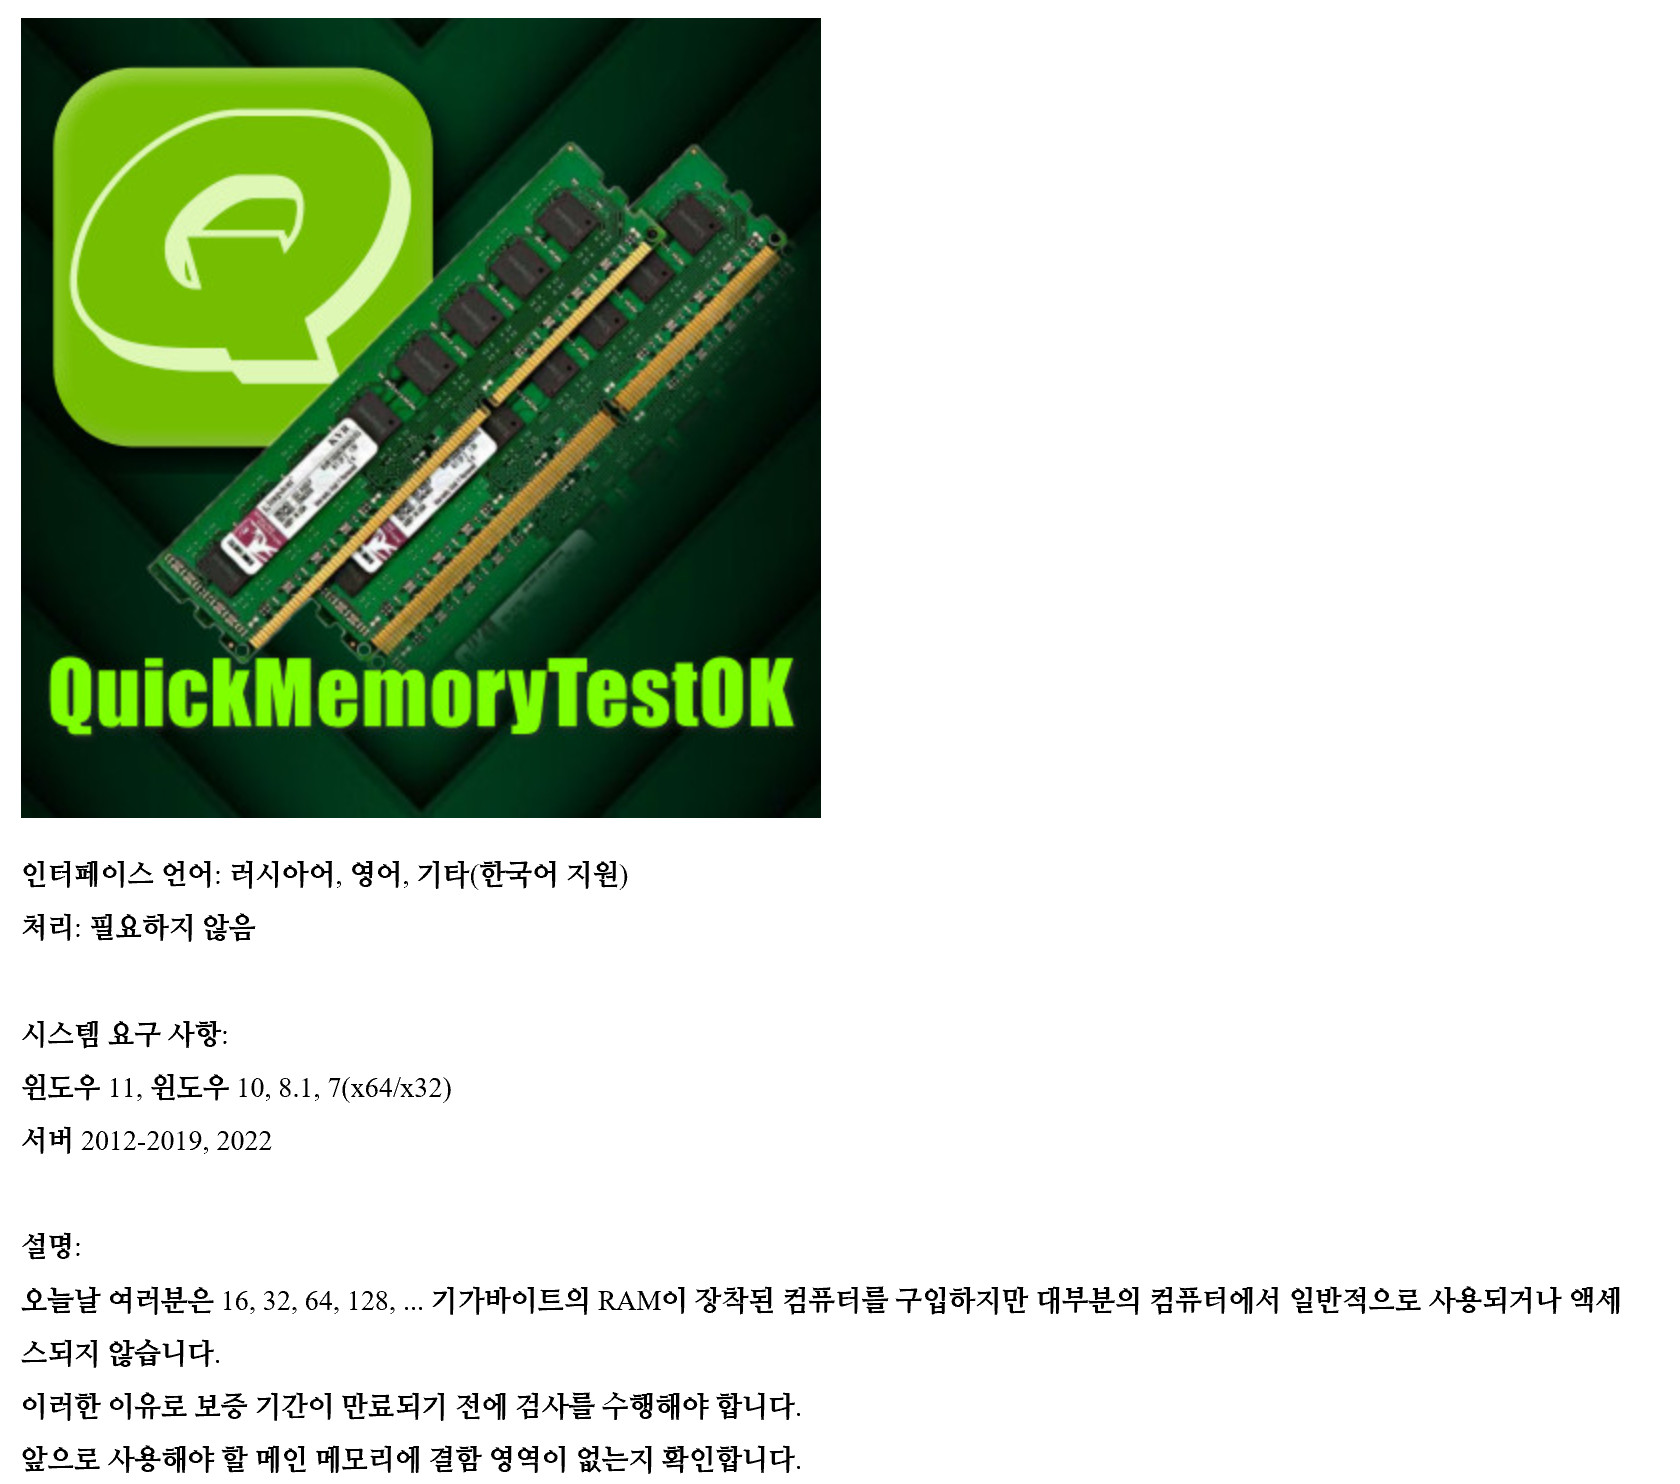 instal the new version for windows QuickMemoryTestOK 4.67